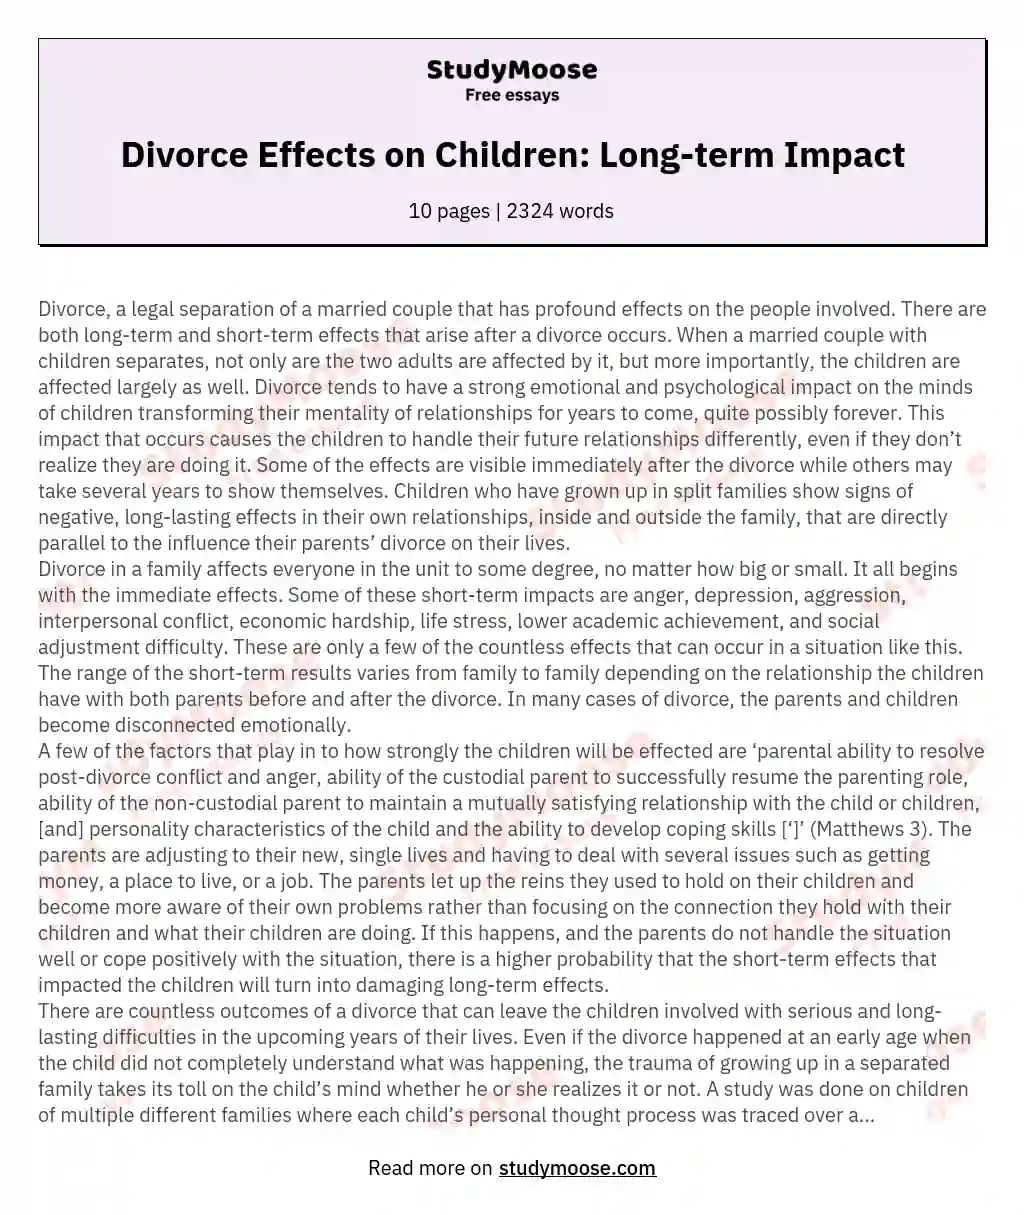 Divorce Effects on Children: Long-term Impact essay